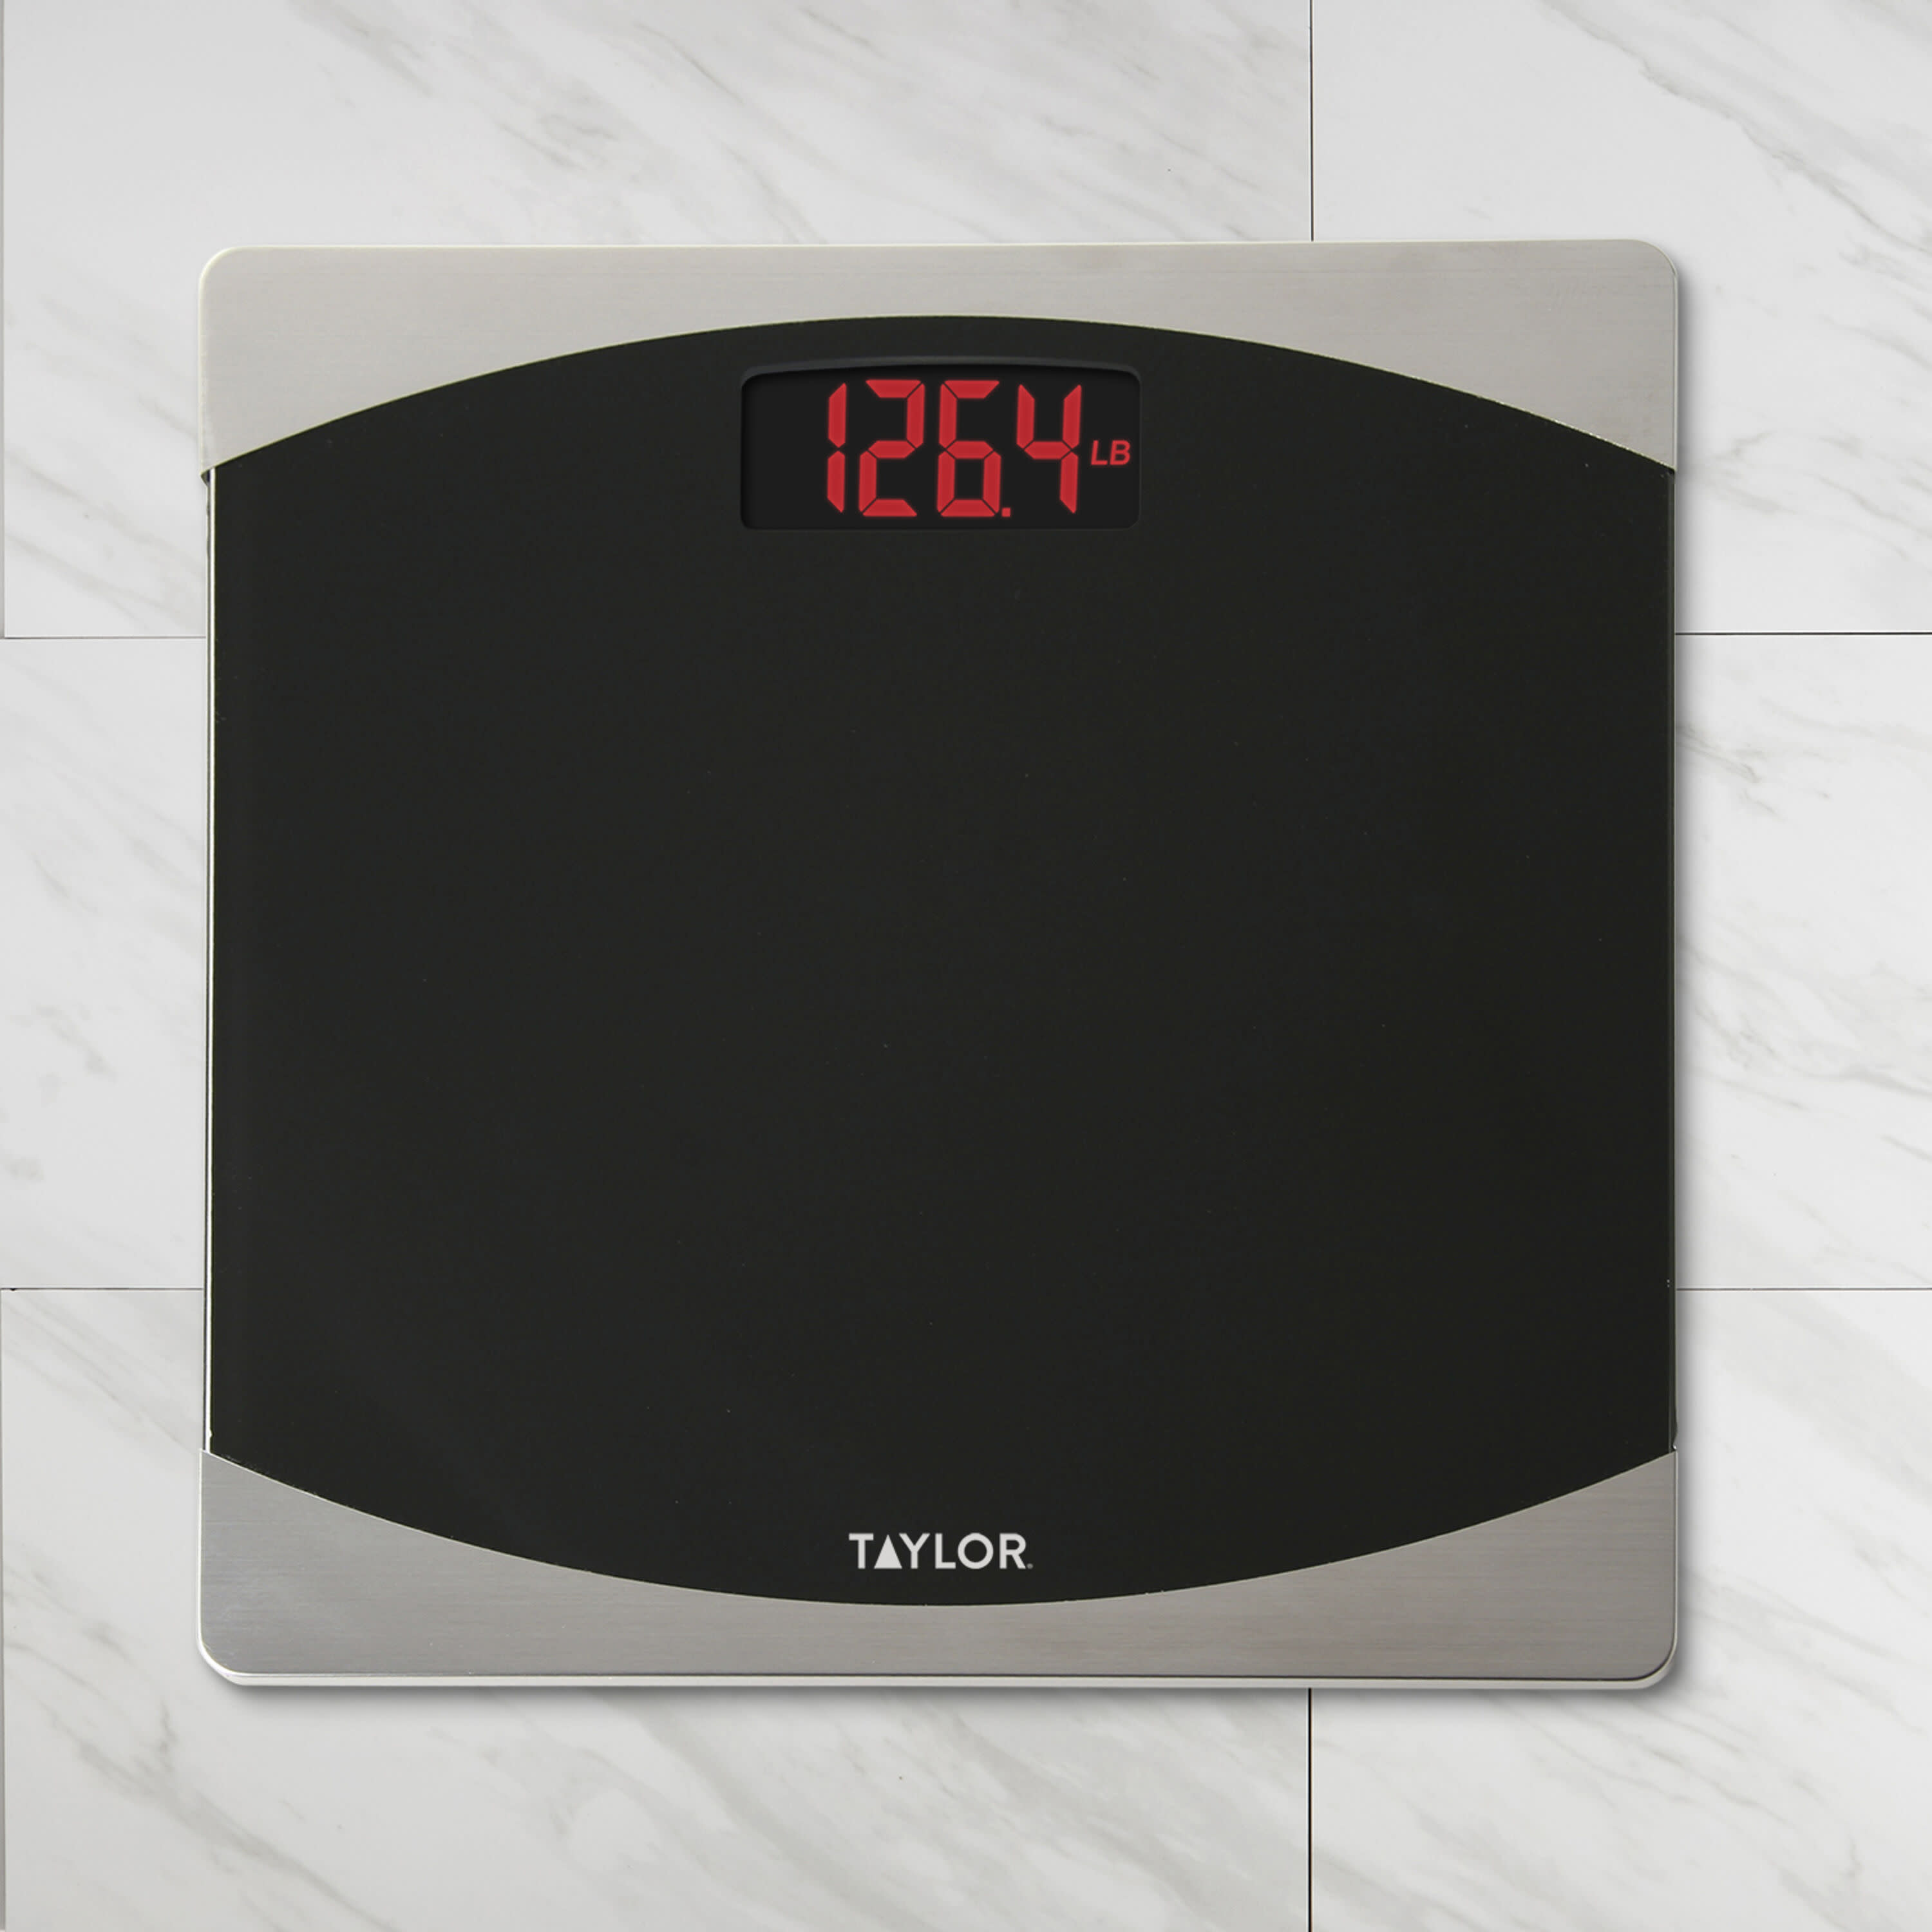 Taylor Digital Bathroom Scale Black/Metal Accents - image 4 of 9